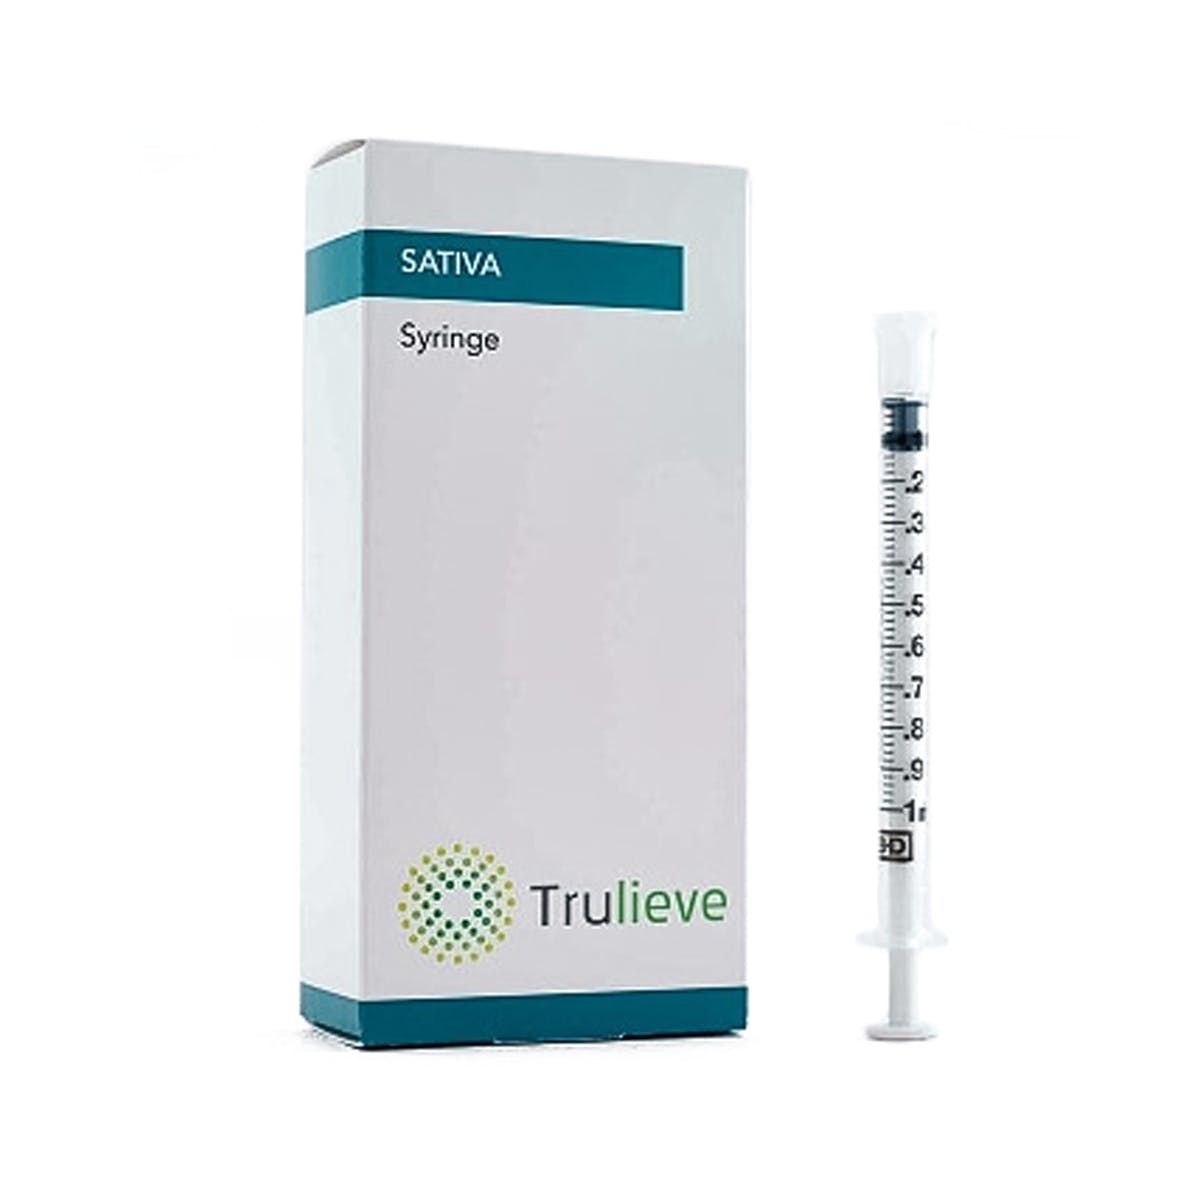 marijuana-dispensaries-trulieve-tampa-in-tampa-oral-syringe-200mg-sativa